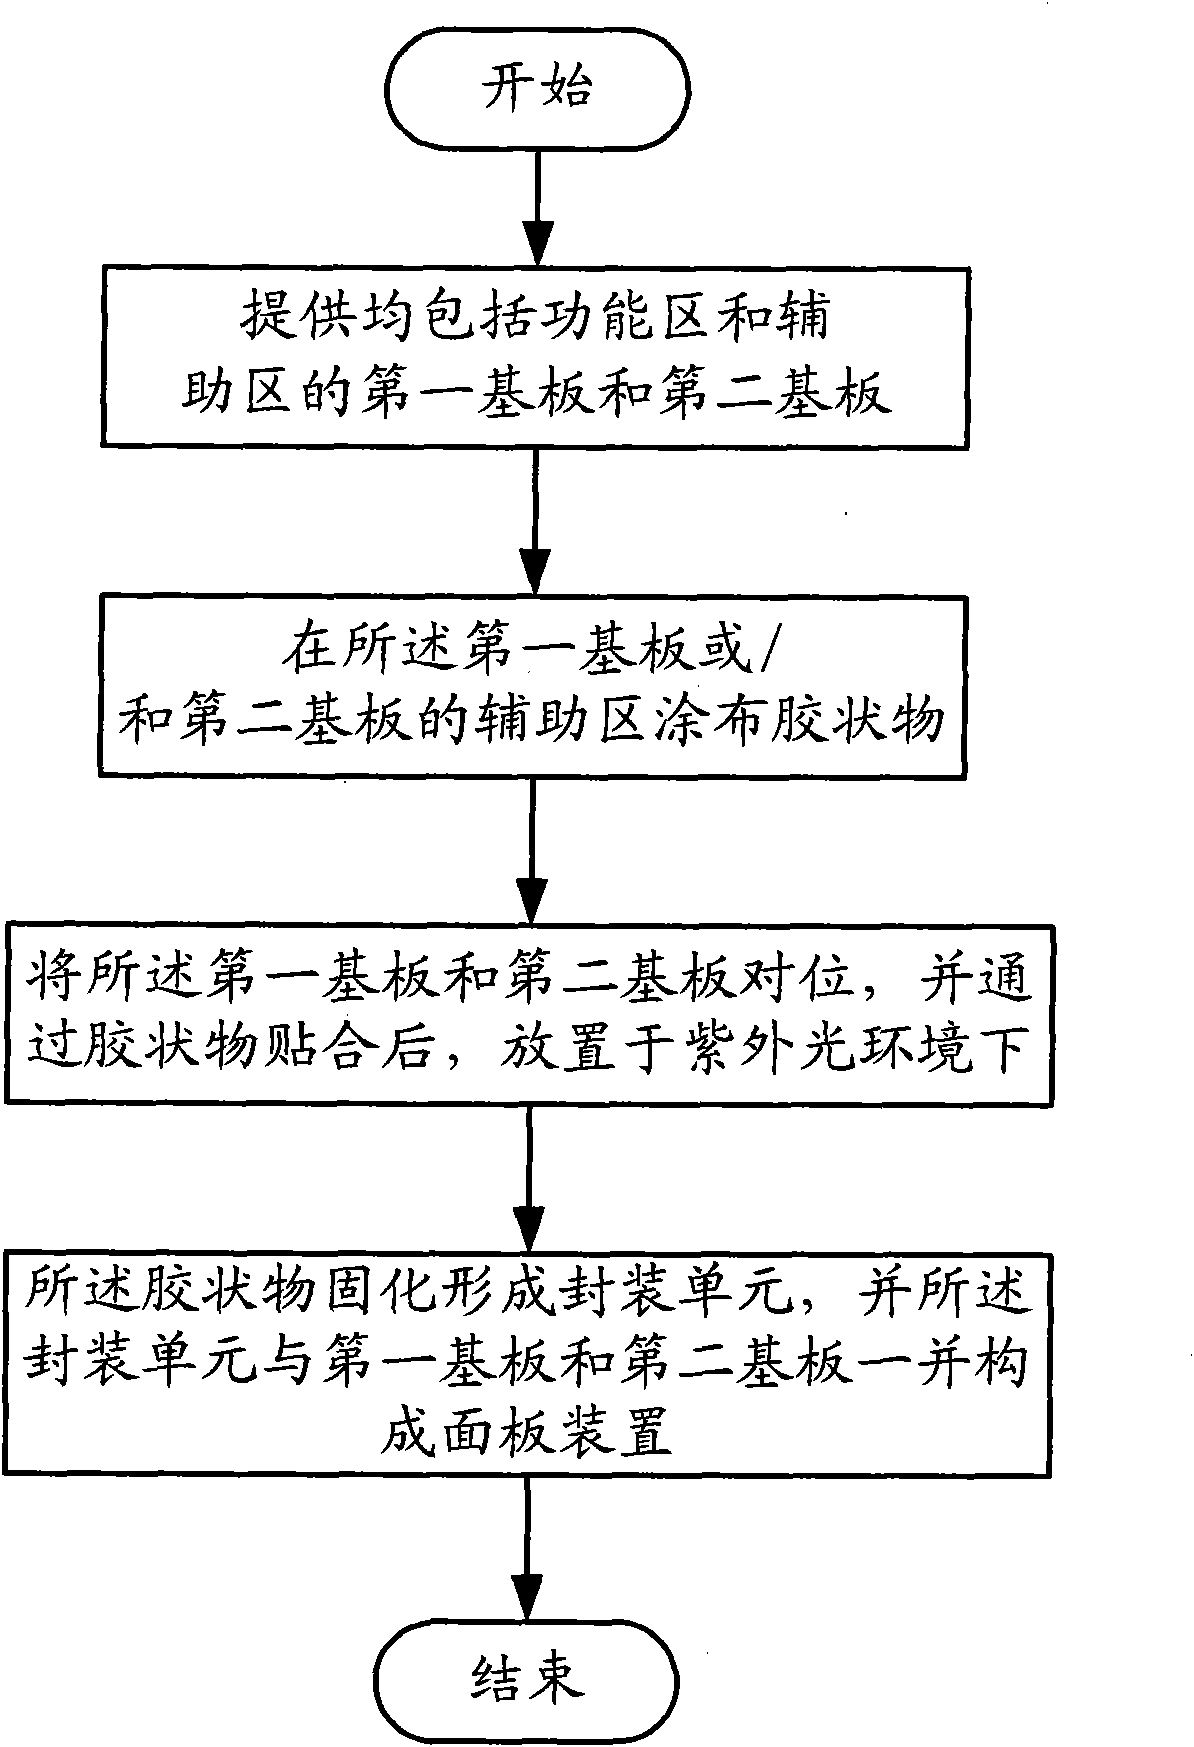 Method for preparing panel device